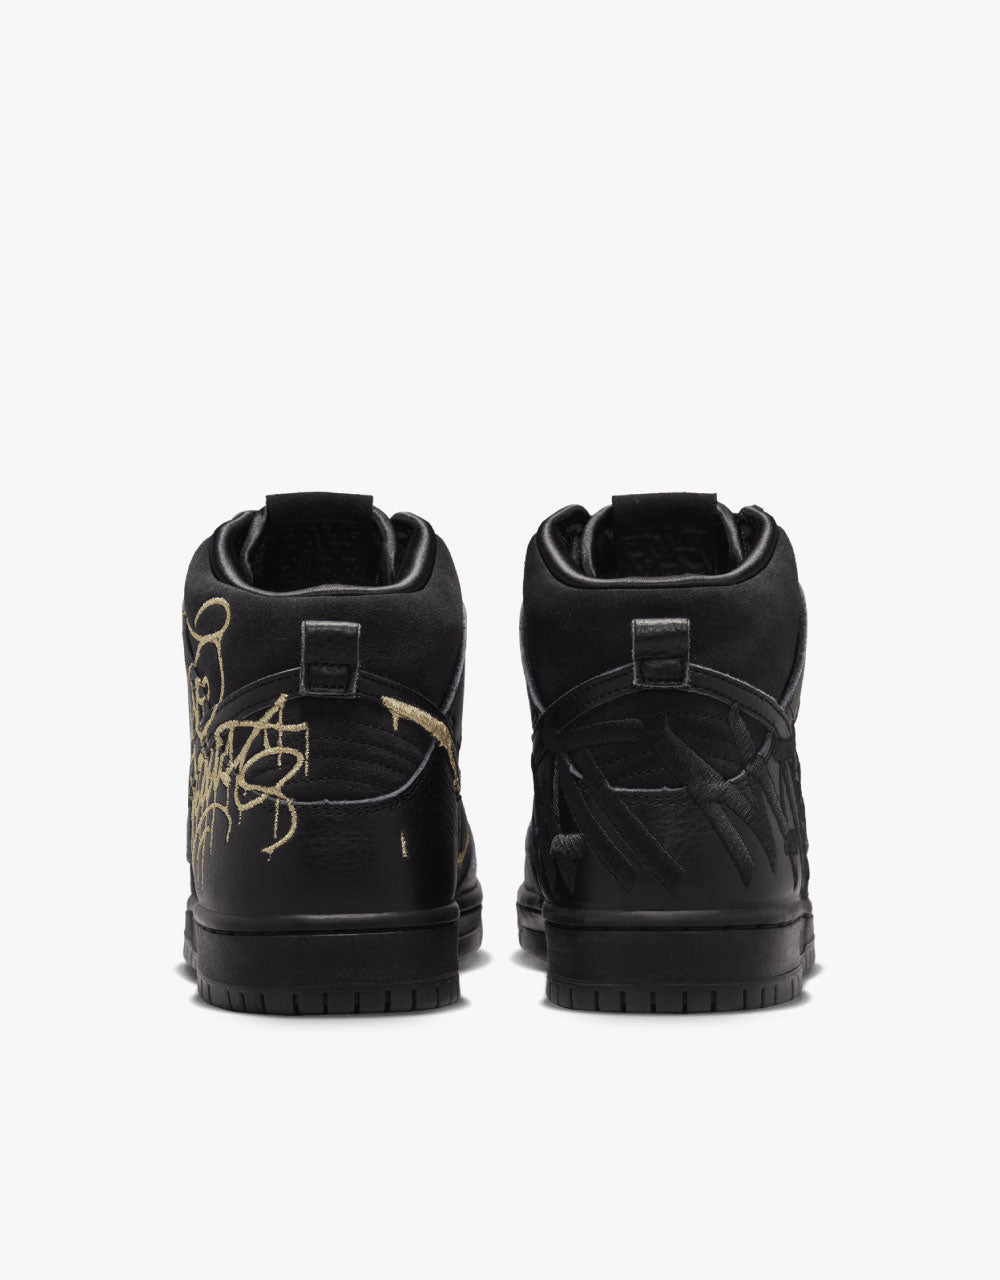 Nike SB 'Faust' Dunk High Pro QS Skate Shoes - Black/Black-Metallic Gold